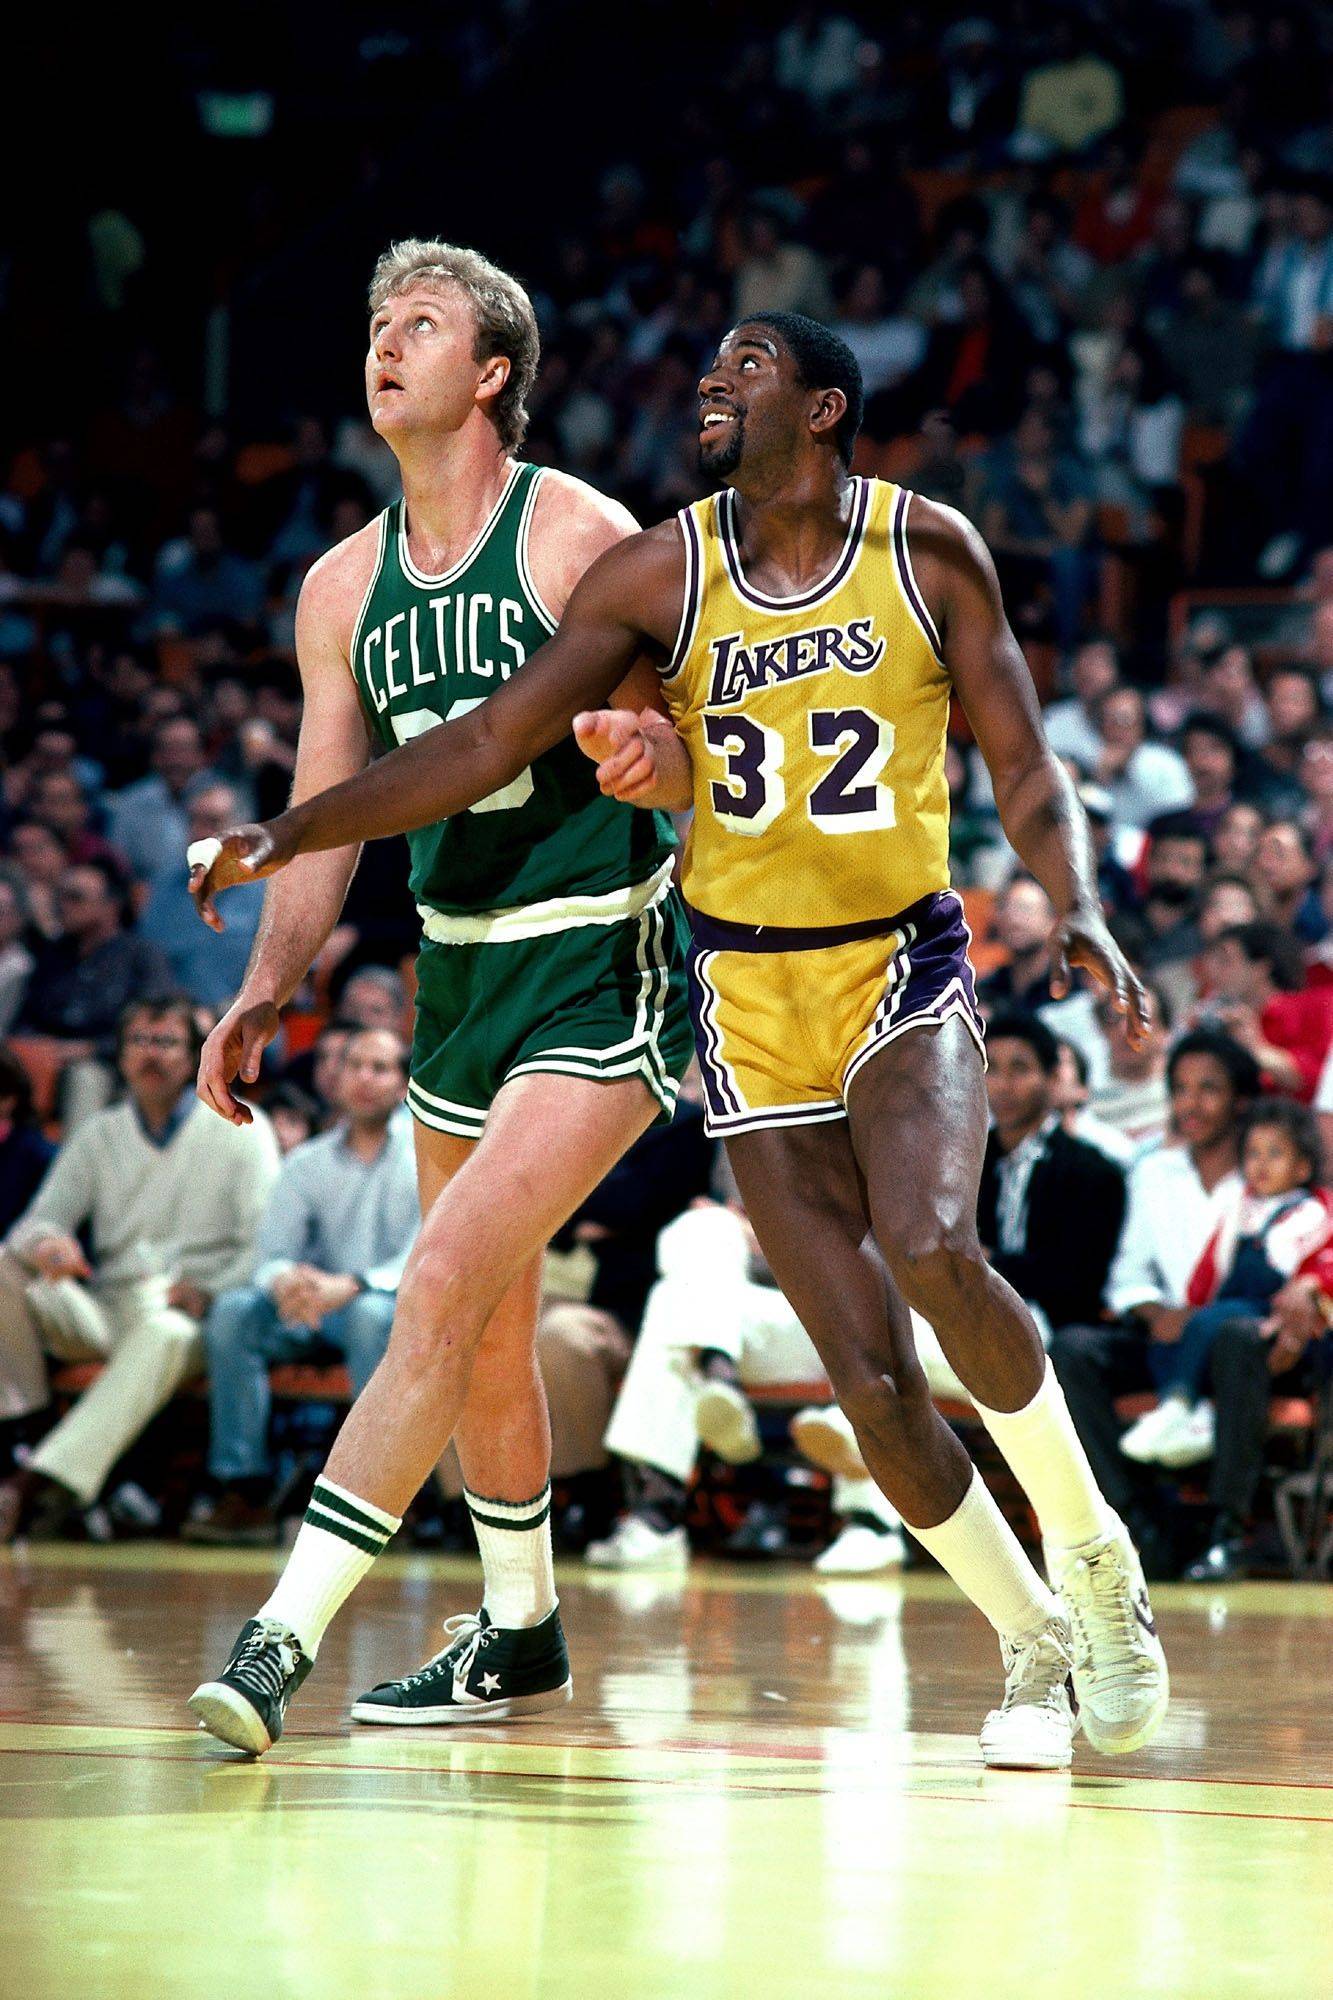 The History of Converse's Chuck Taylor & Basketball | Shoe Palace Blog